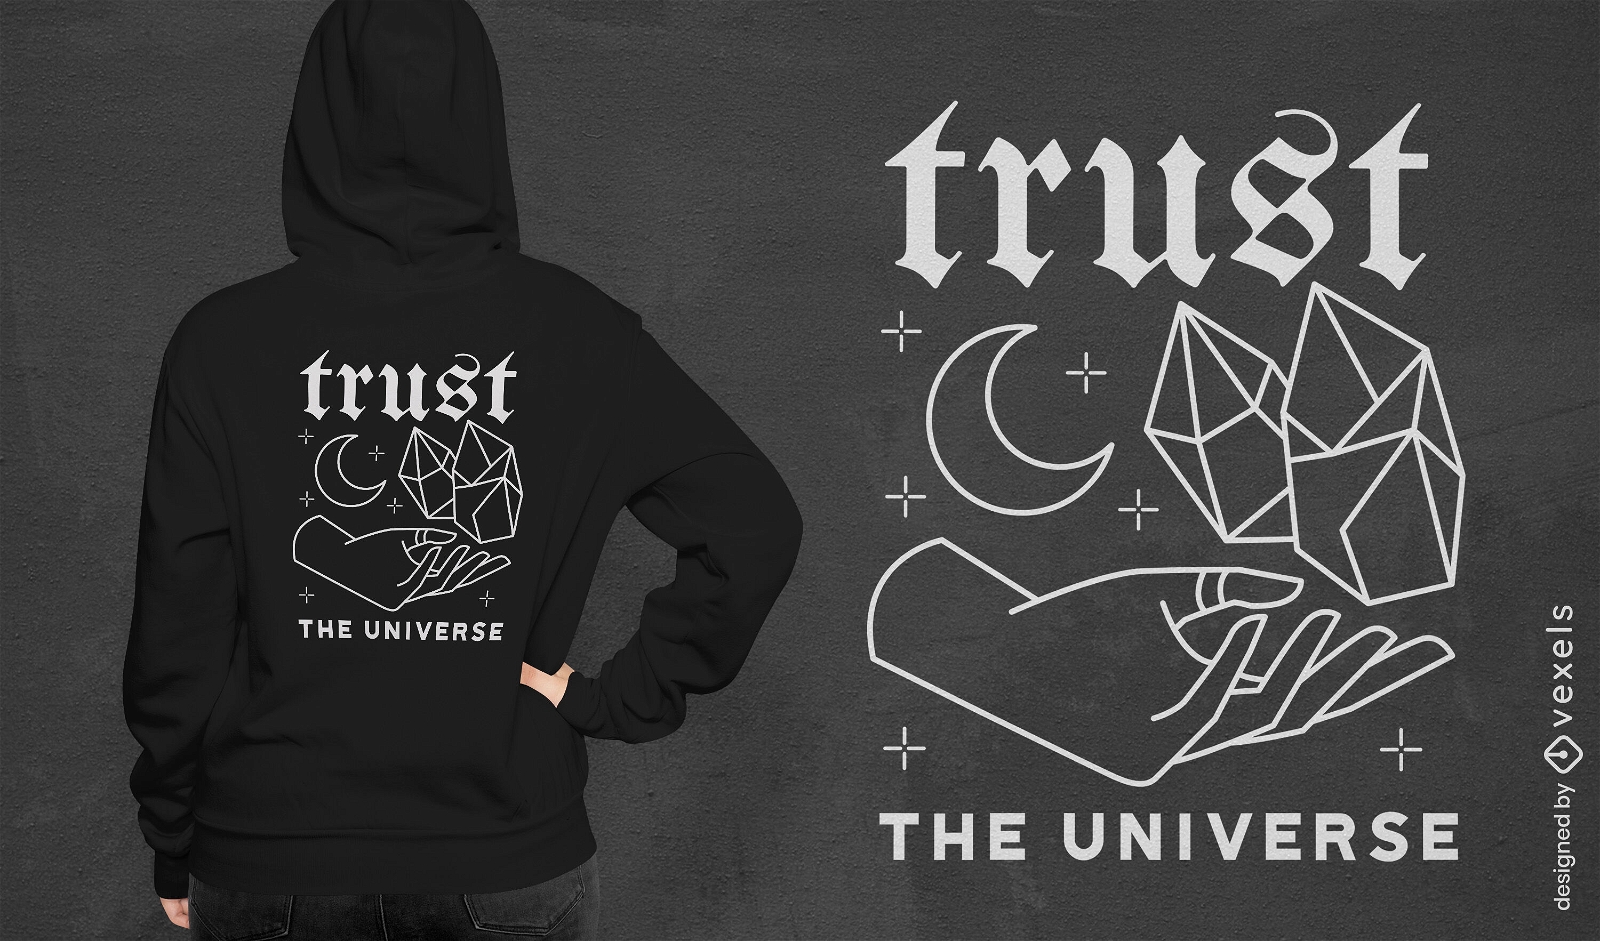 Trust the universe esoteric t-shirt design